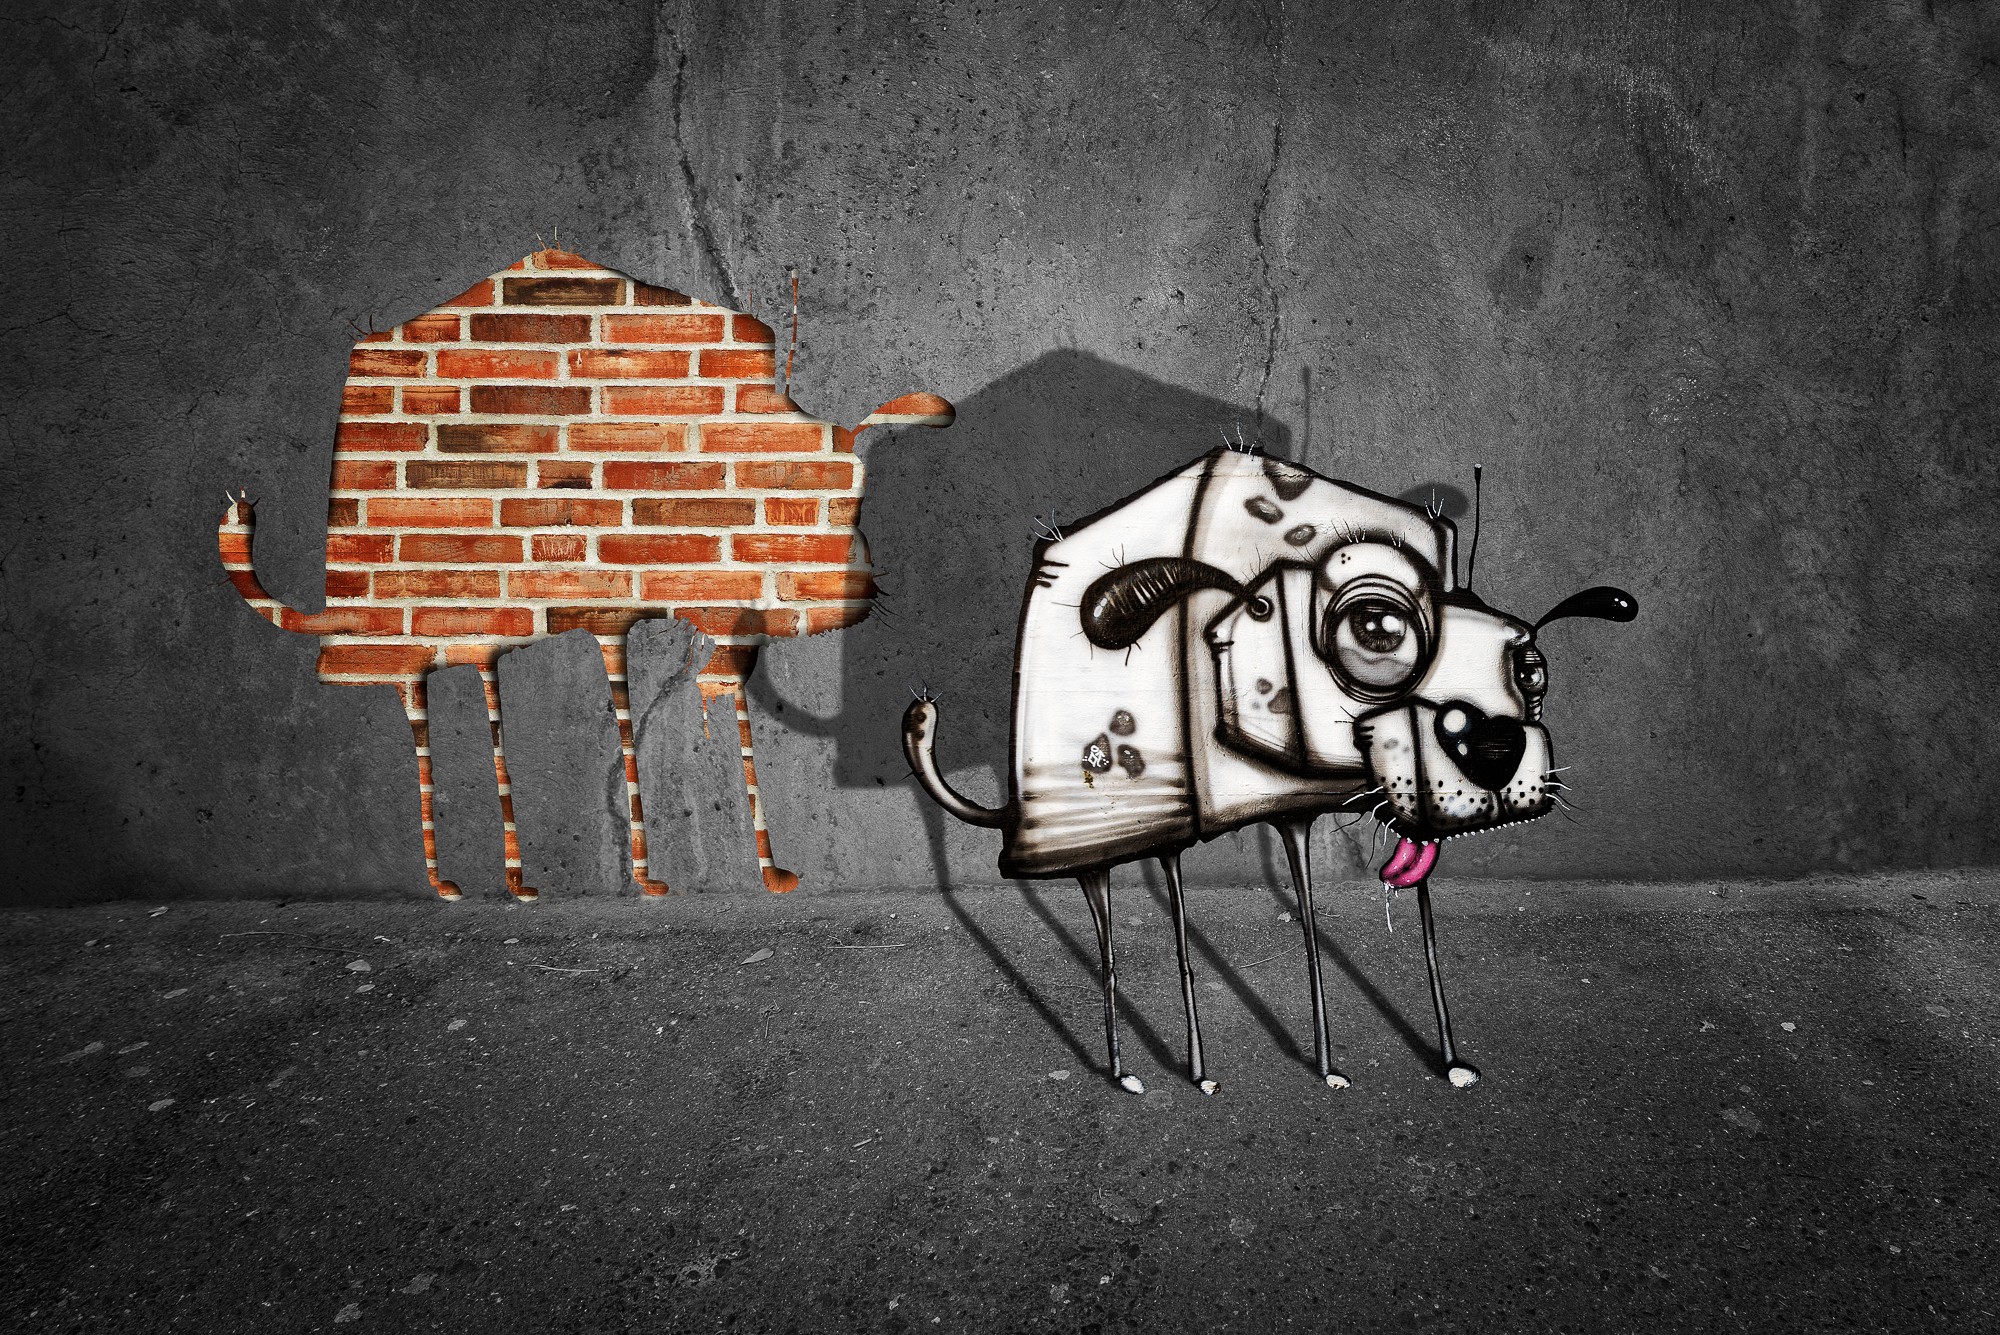 General 2000x1335 animals dog graffiti digital art wall bricks shadow